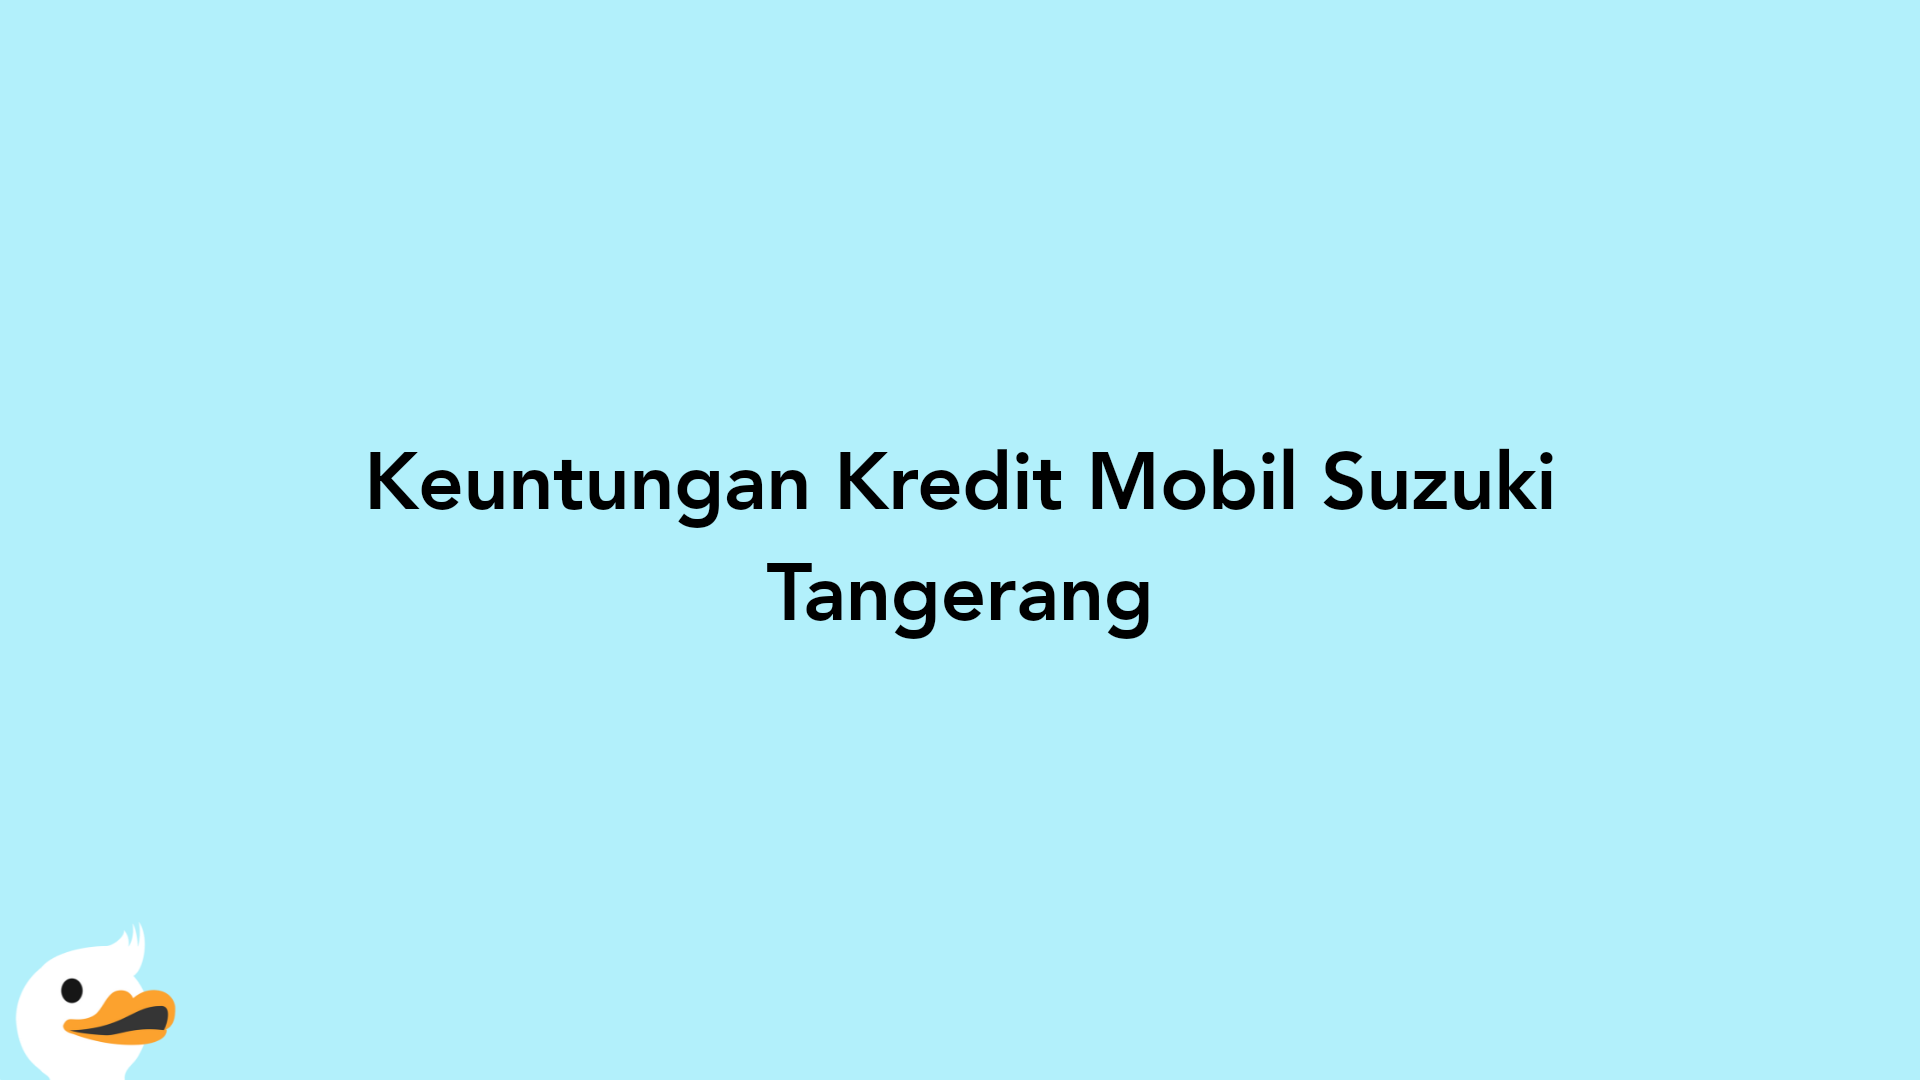 Keuntungan Kredit Mobil Suzuki Tangerang